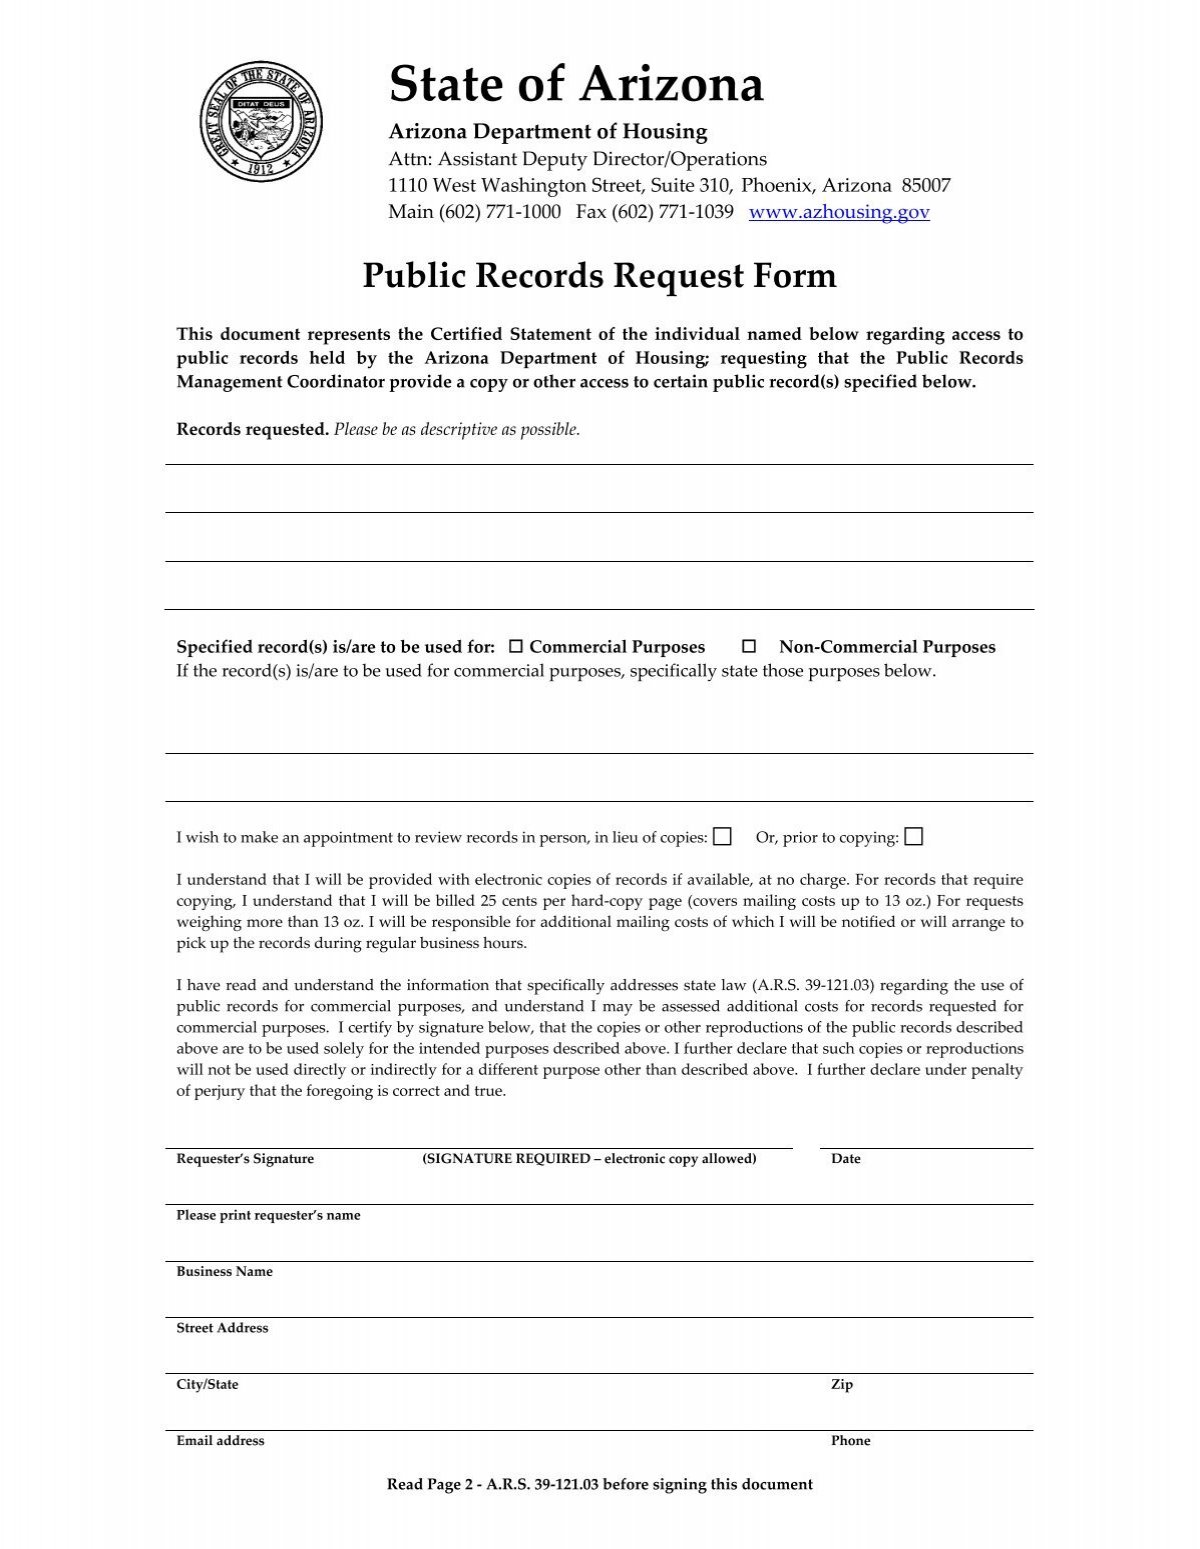 public-records-request-form-arizona-department-of-housing